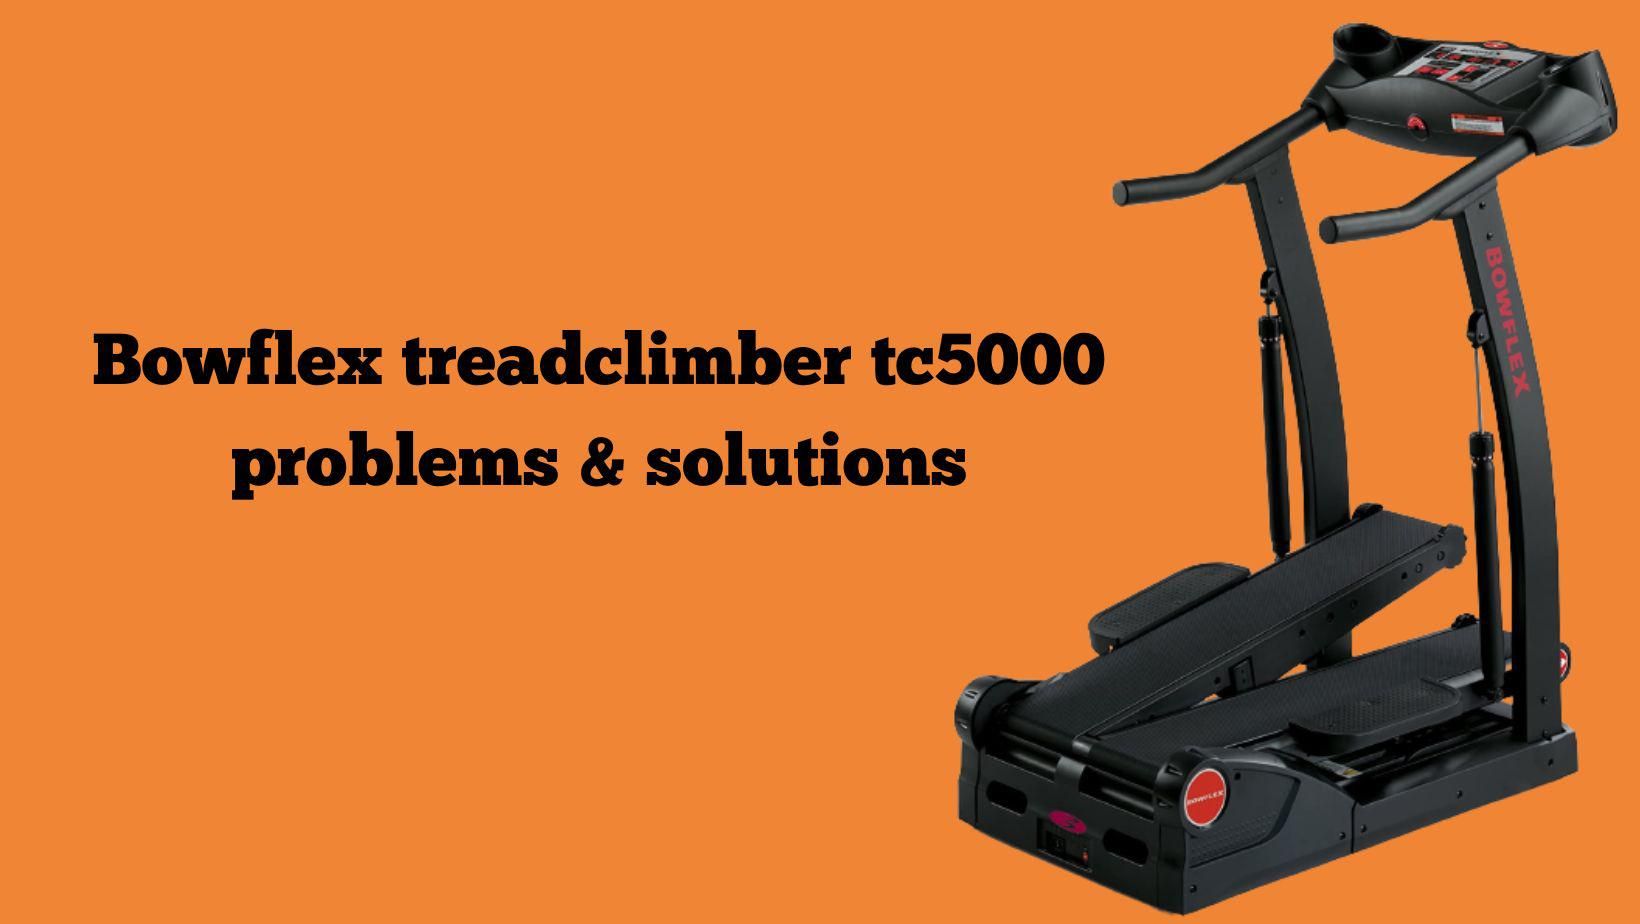 Bowflex treadclimber tc5000 problems & solutions